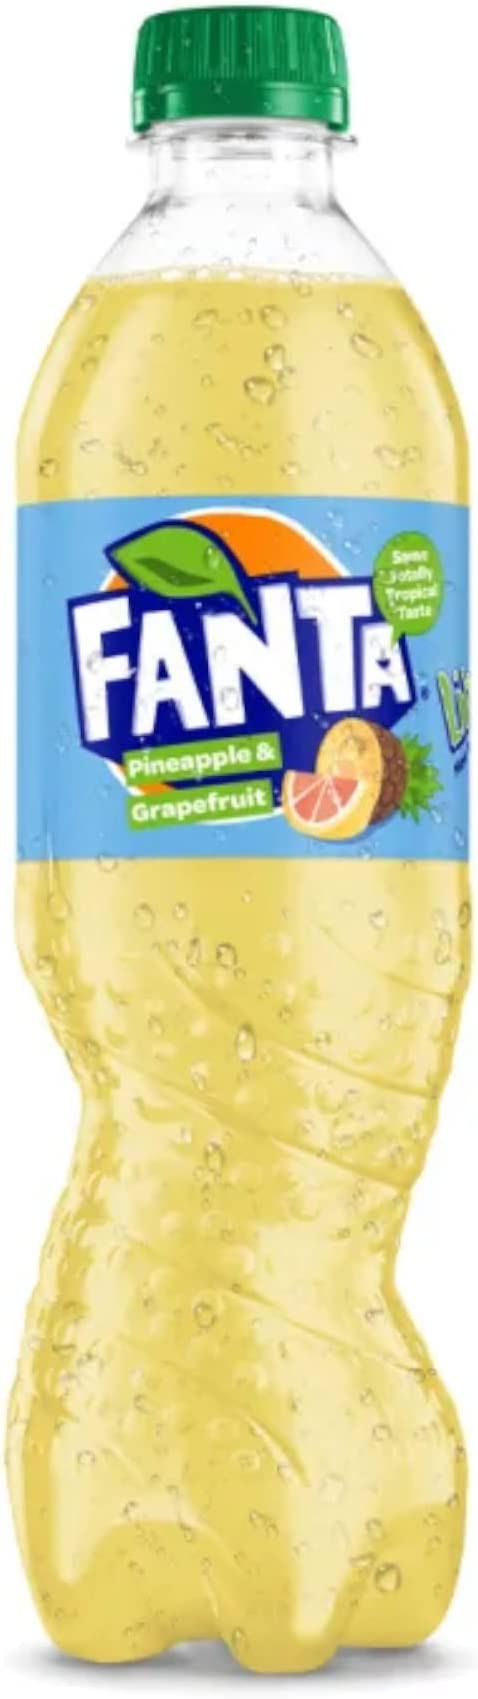 Fanta pineapple and grapefruit Pack of 12x500ml